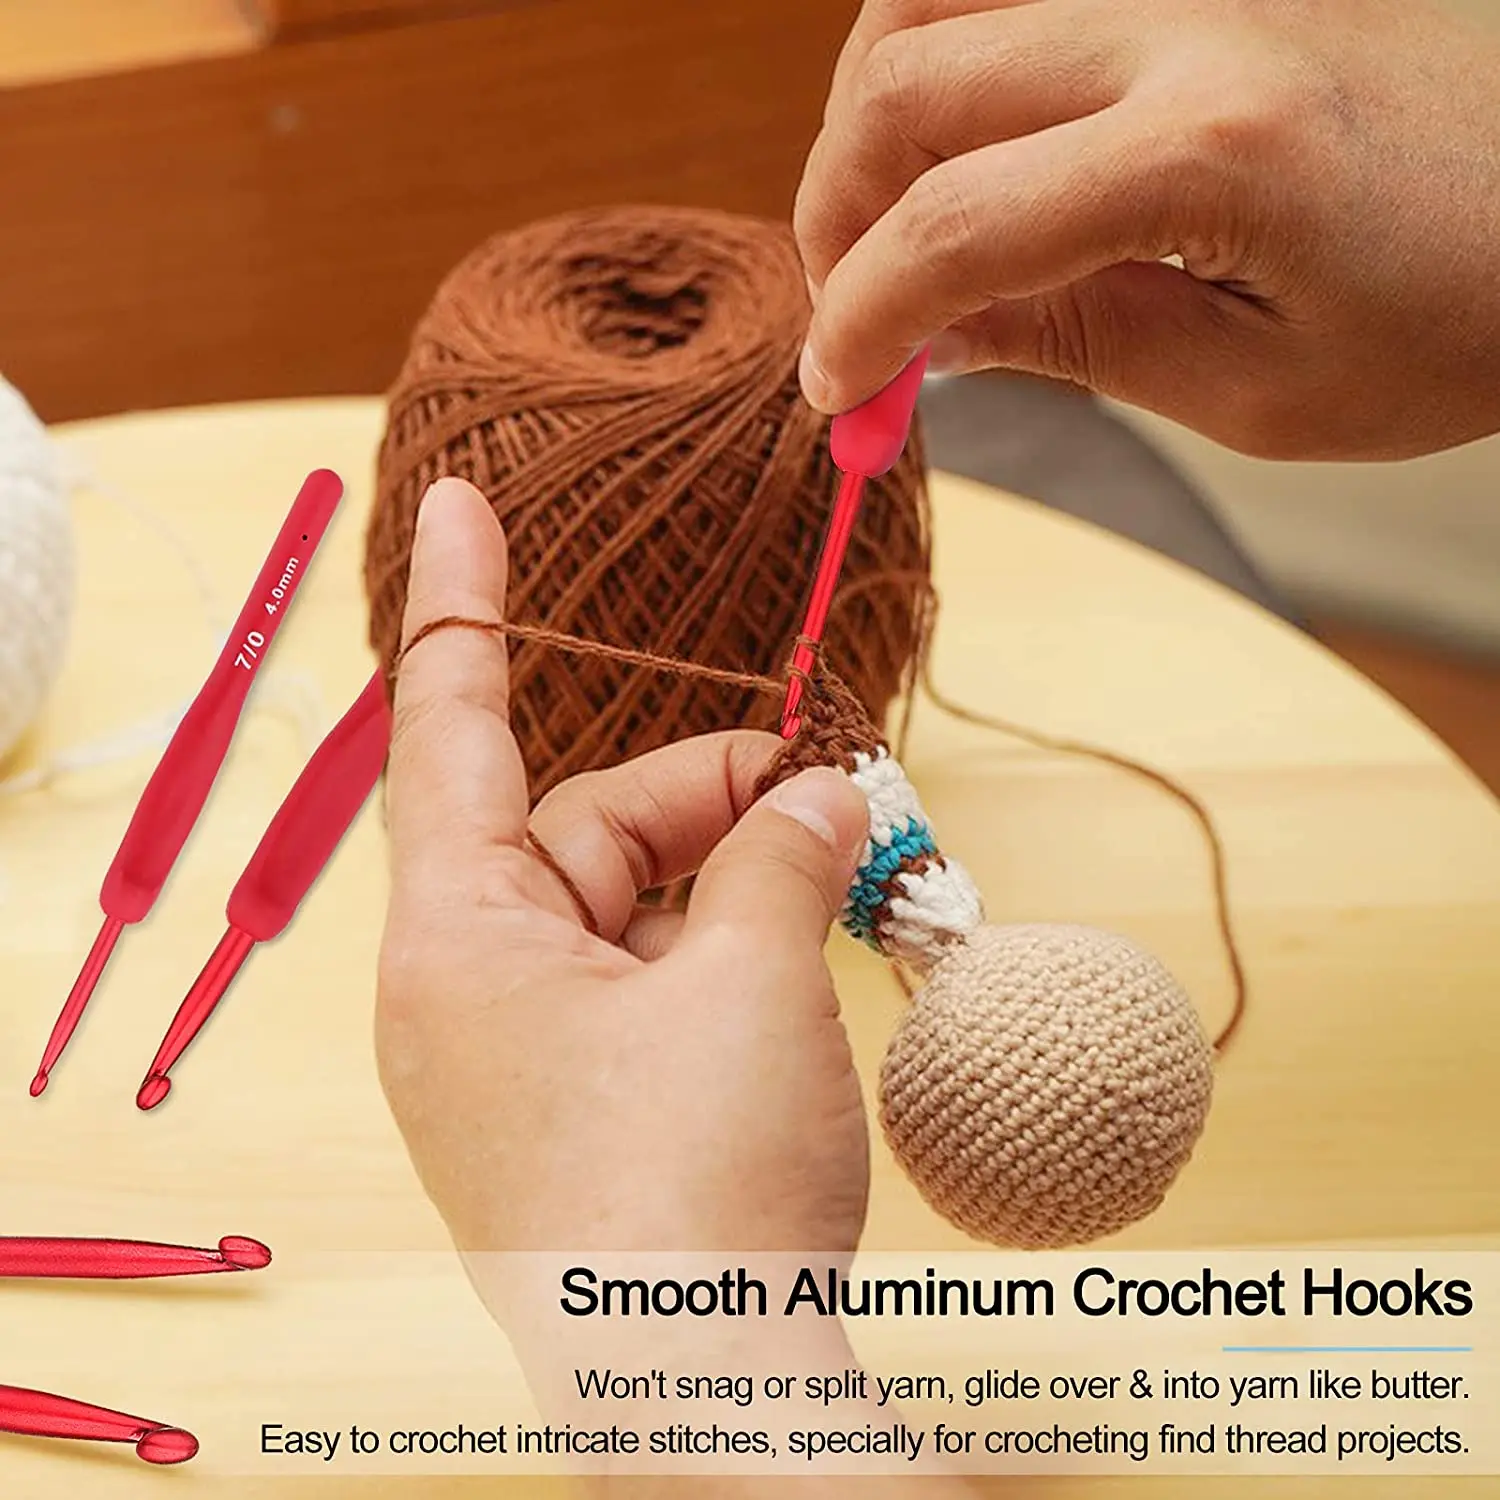  2mm 4.5mm Crochet Hooks Extended Knitting Needles Ergonomic  Crochet Hooks Kit for Arthritic Hands with Stitch Markers Needles for  Beginners and Crocheting Yarn